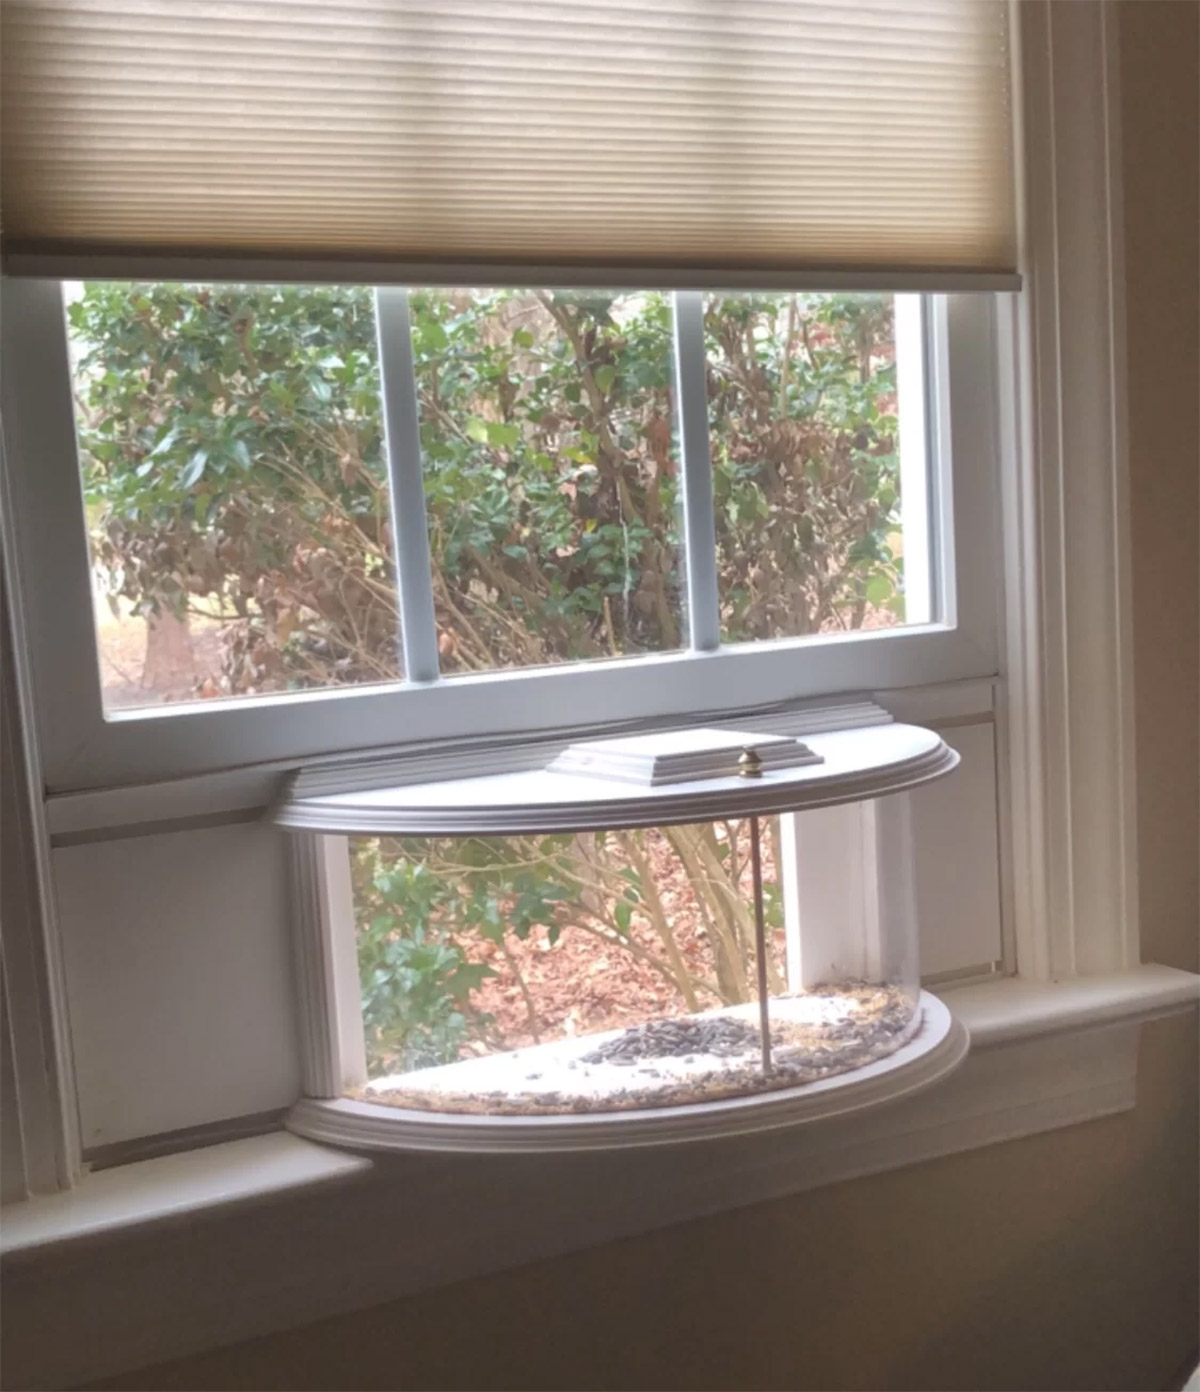 Rounded window bird viewer - Inside house bird feeder